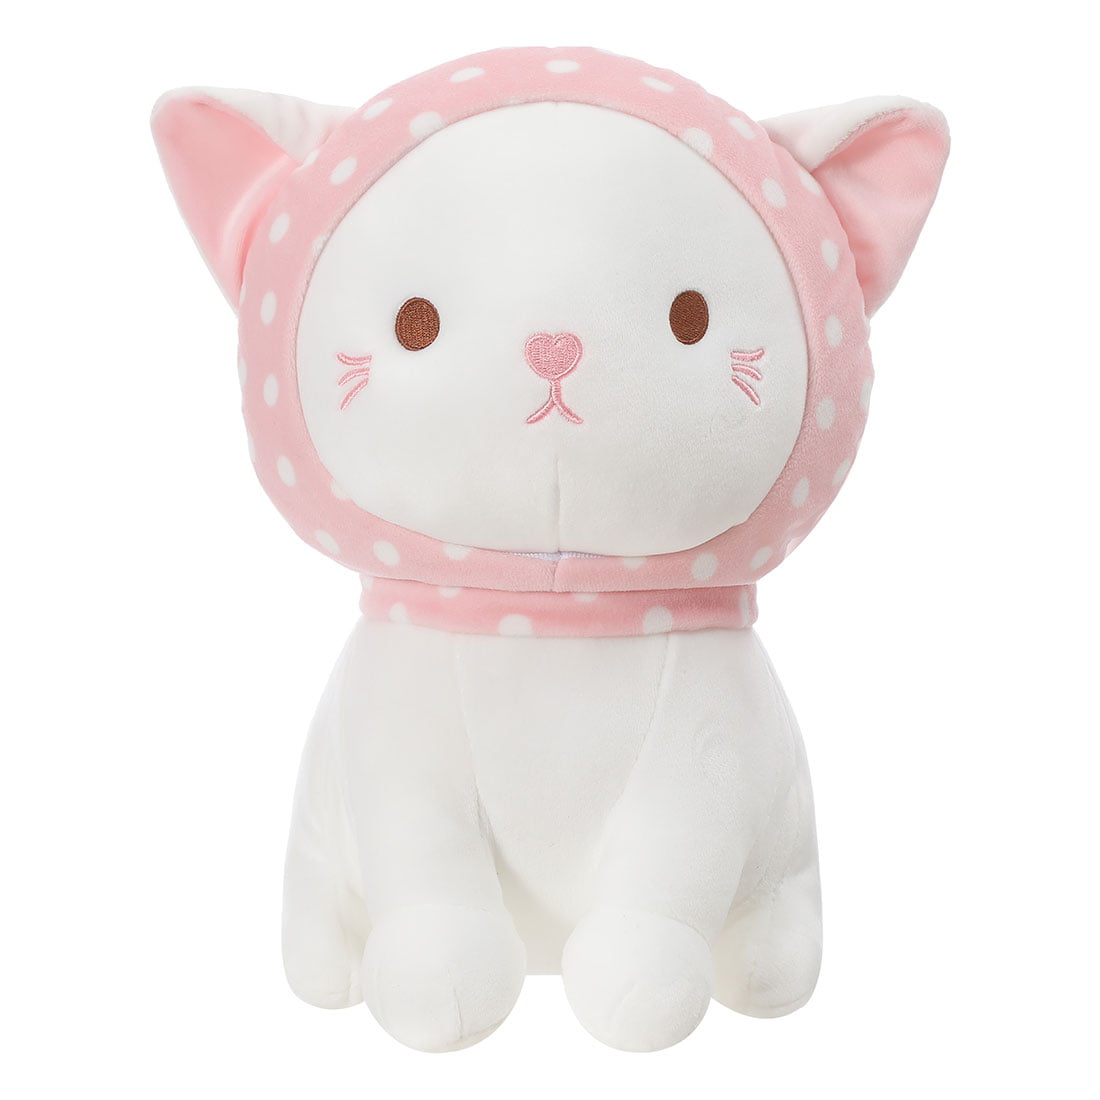 Cute Stuffed Animal Model Cat Kitten Plush Figure Toy Gift Home Decor Child Gift 